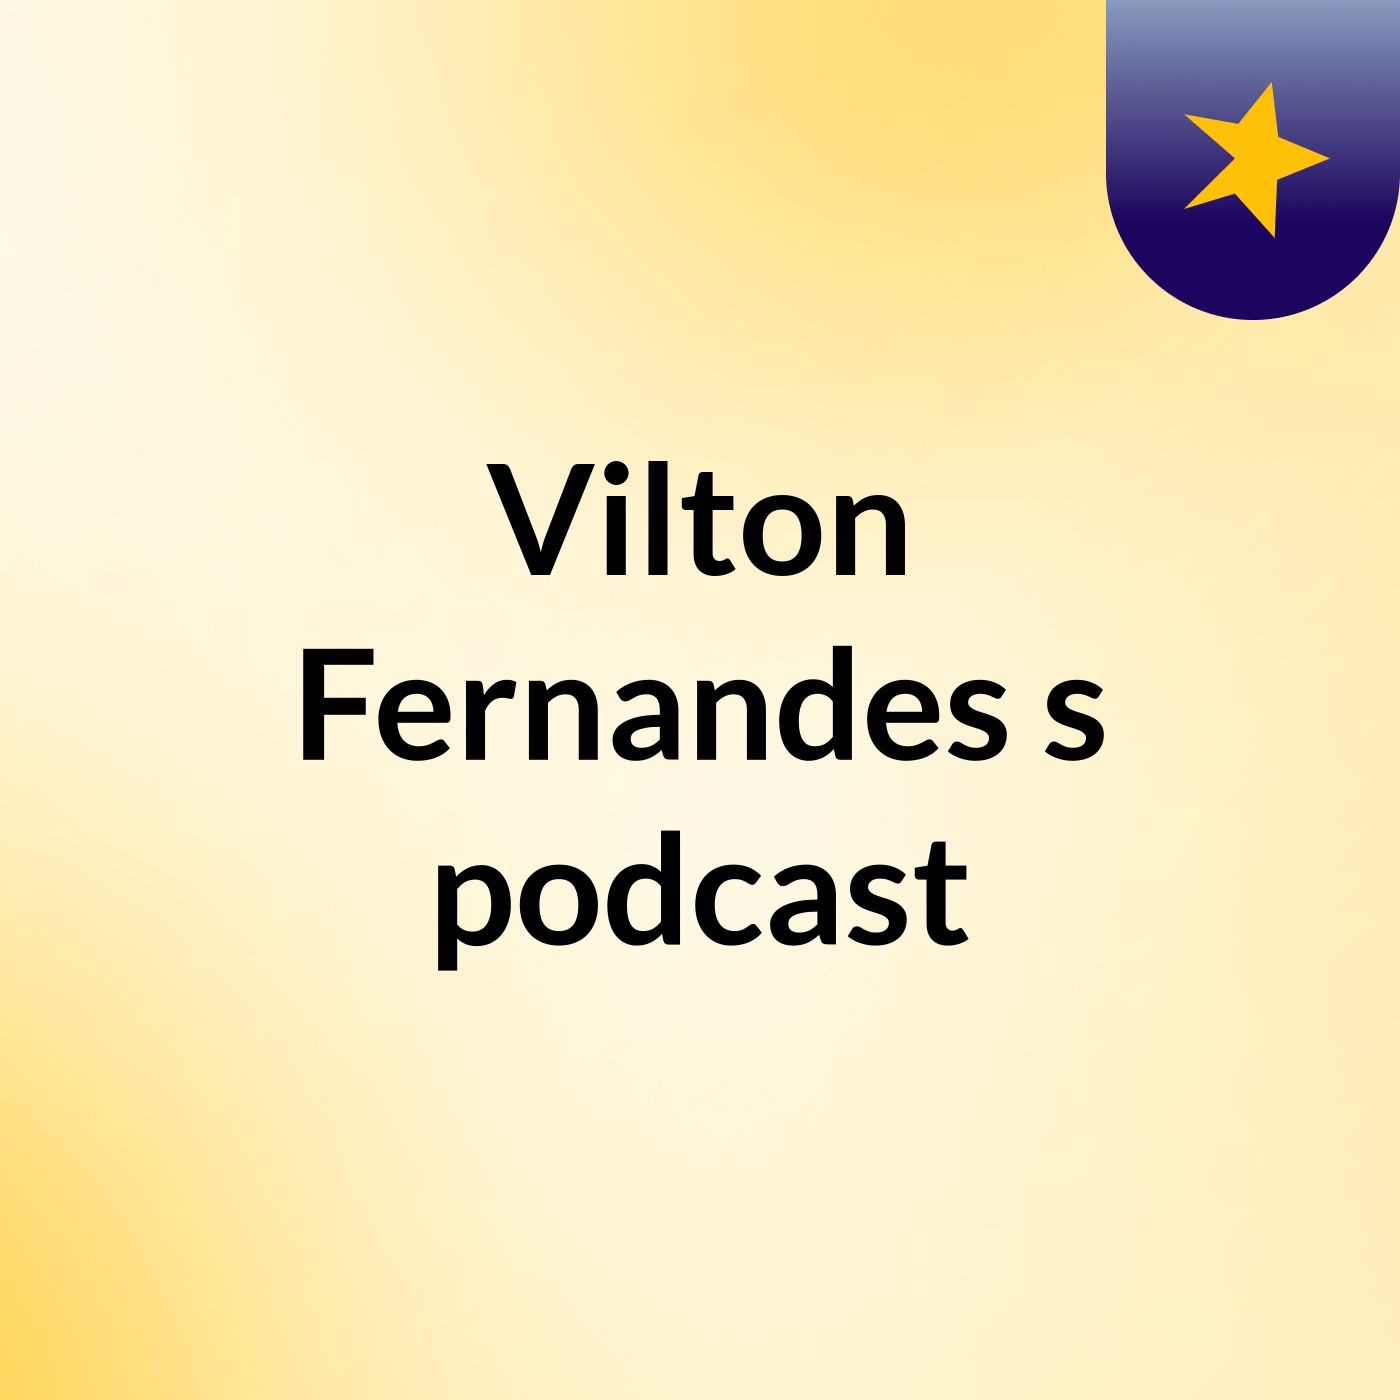 Vilton Fernandes's podcast